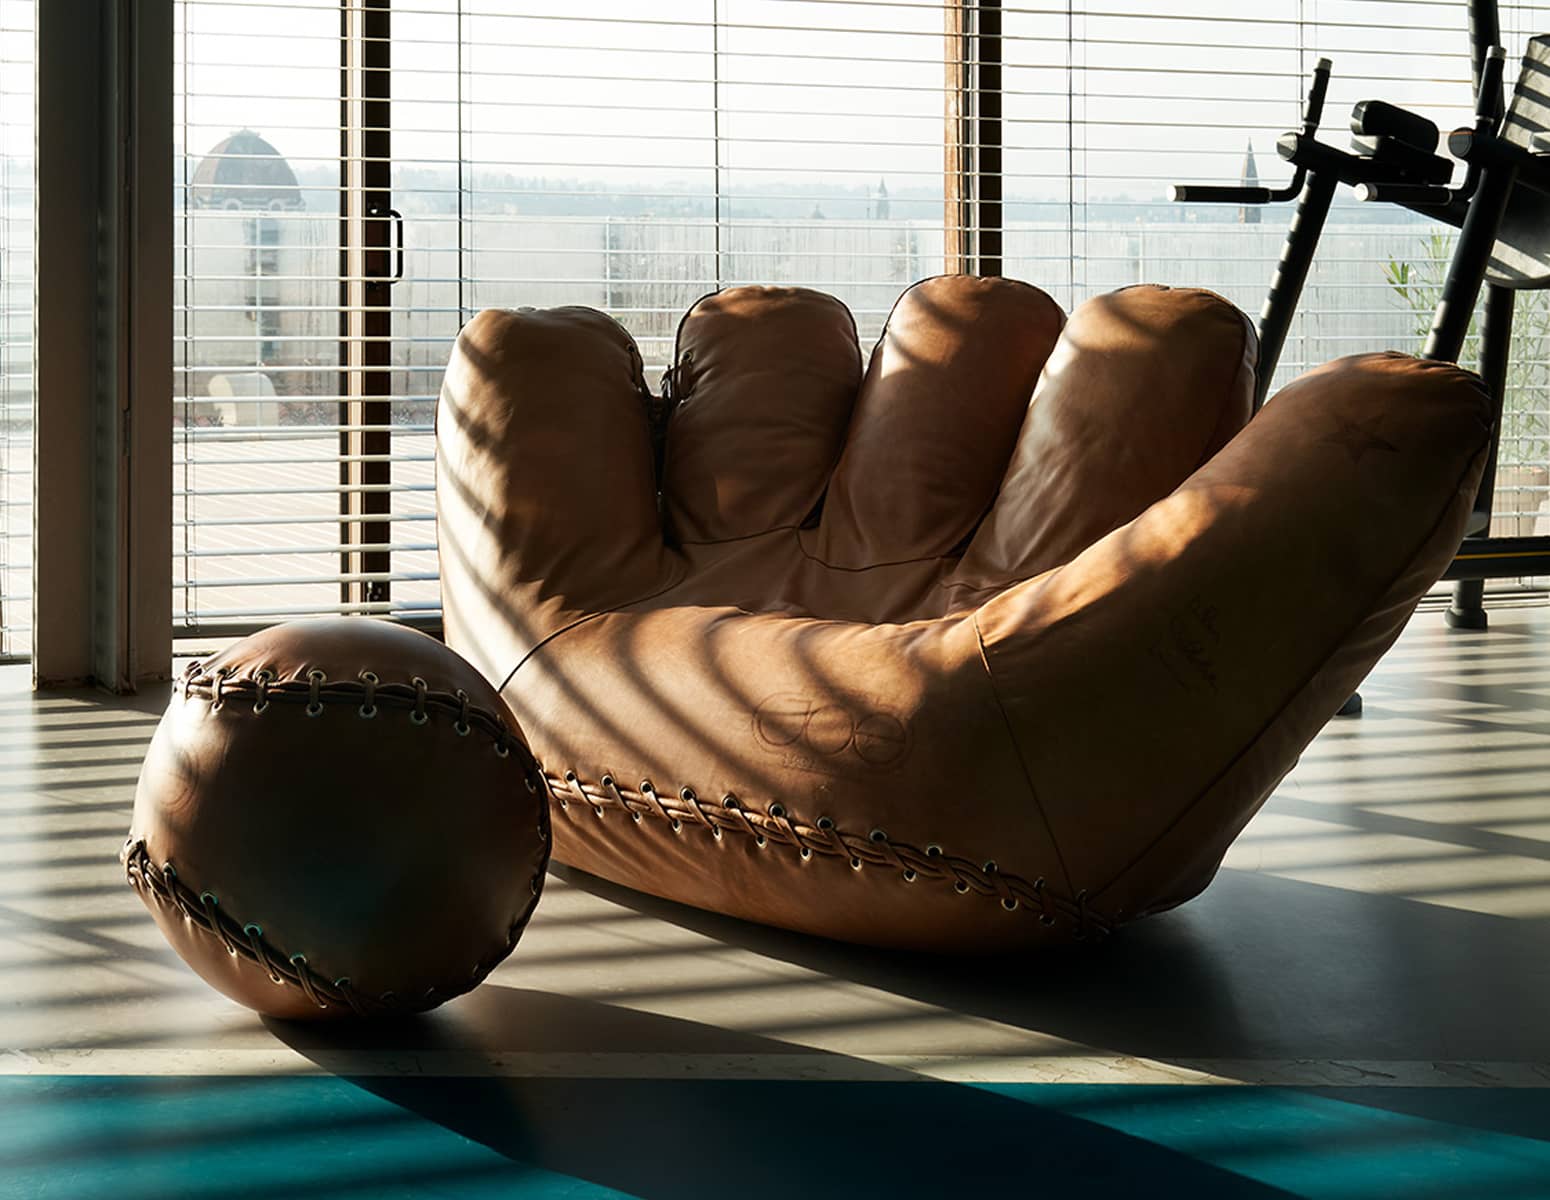 JOE Armchair - Giant Leather Baseball Glove Chair and Baseball Ottoman